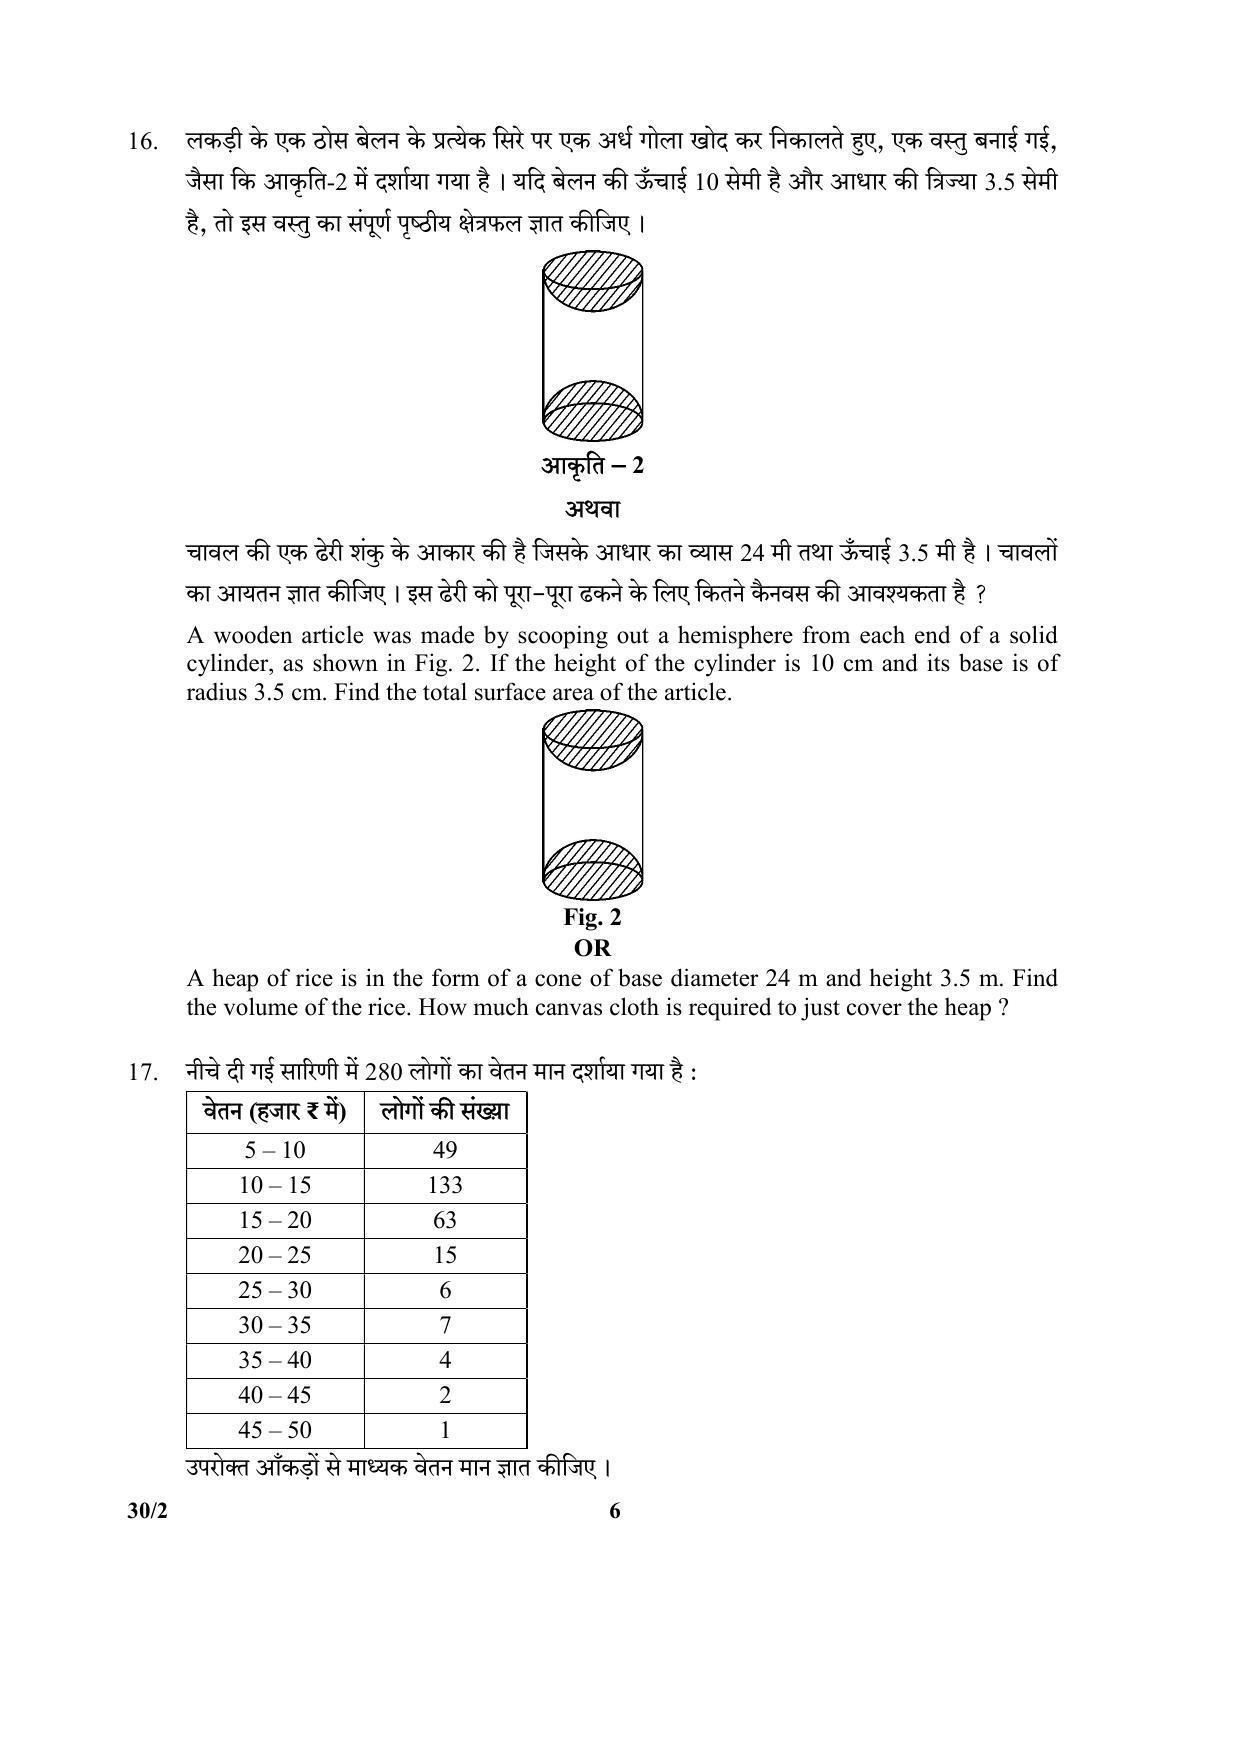 CBSE Class 10 30-2 SET-2 (Mathematics) 2018 Question Paper - Page 6